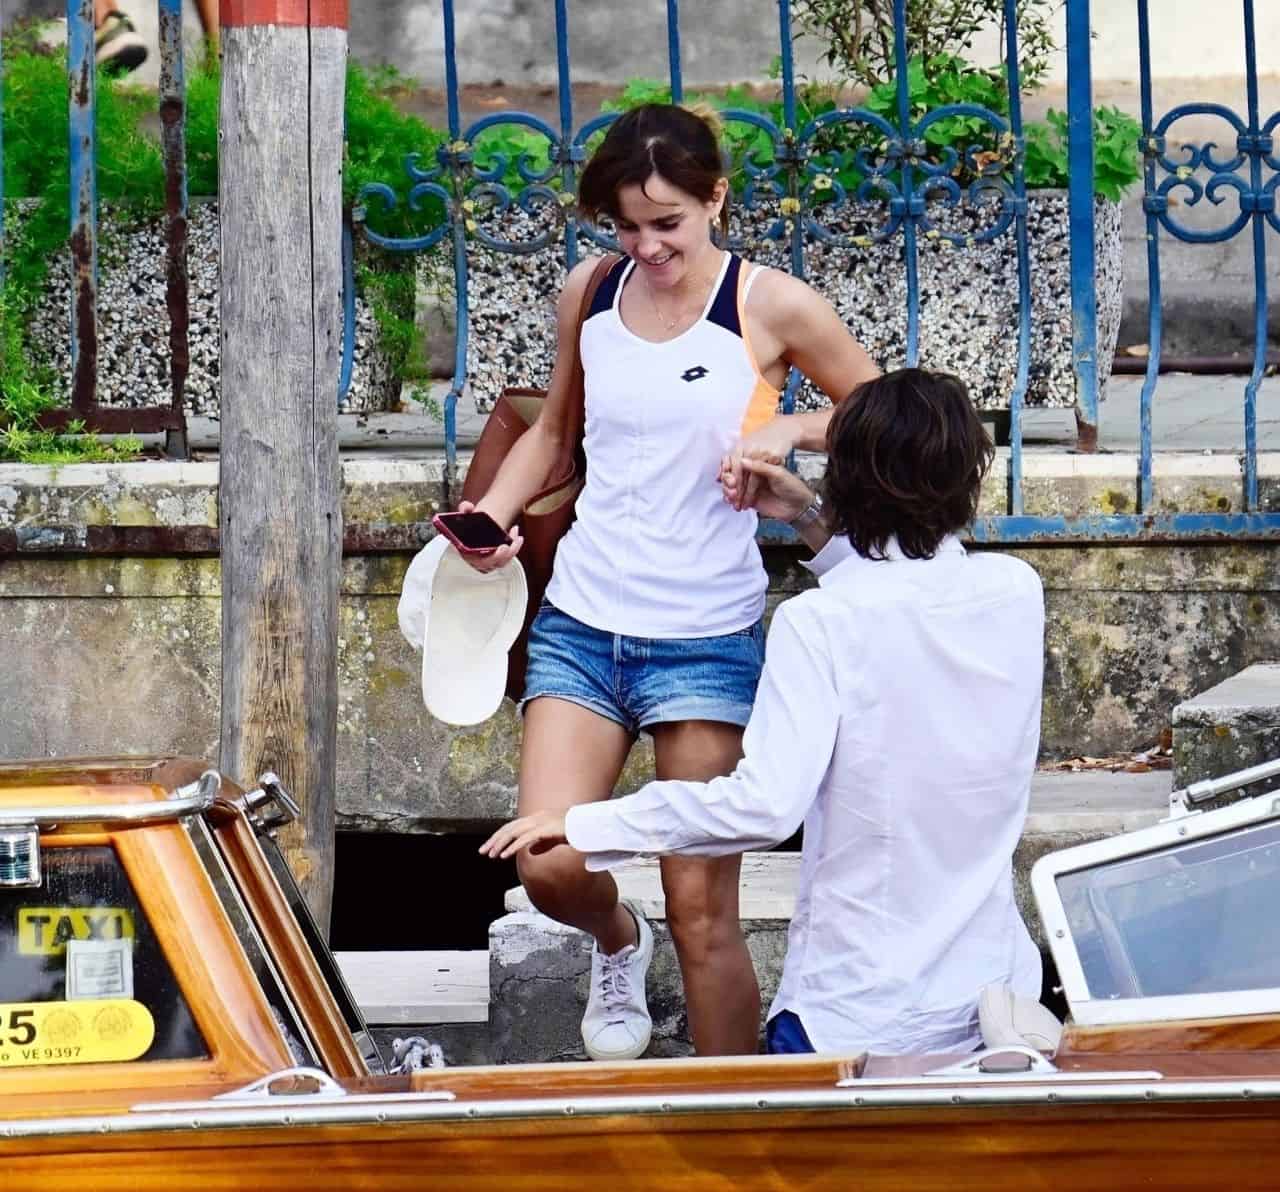 Emma Watson Looks Sporty as She Enjoys Venice with Brandon Green